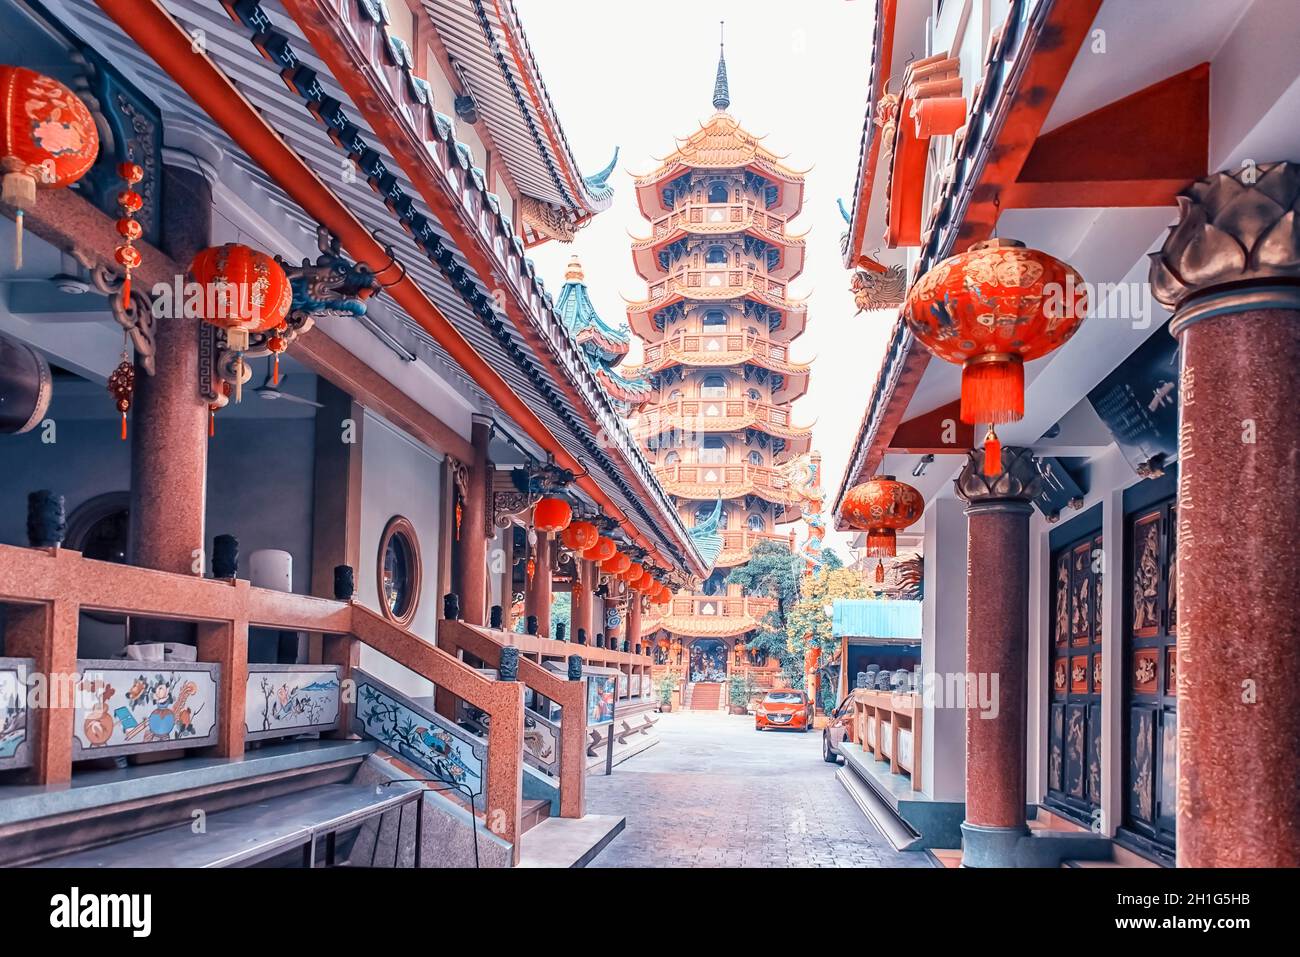 Che Chin Khor Templo pagoda de estilo chino y en Bangkok, Tailandia Foto de stock